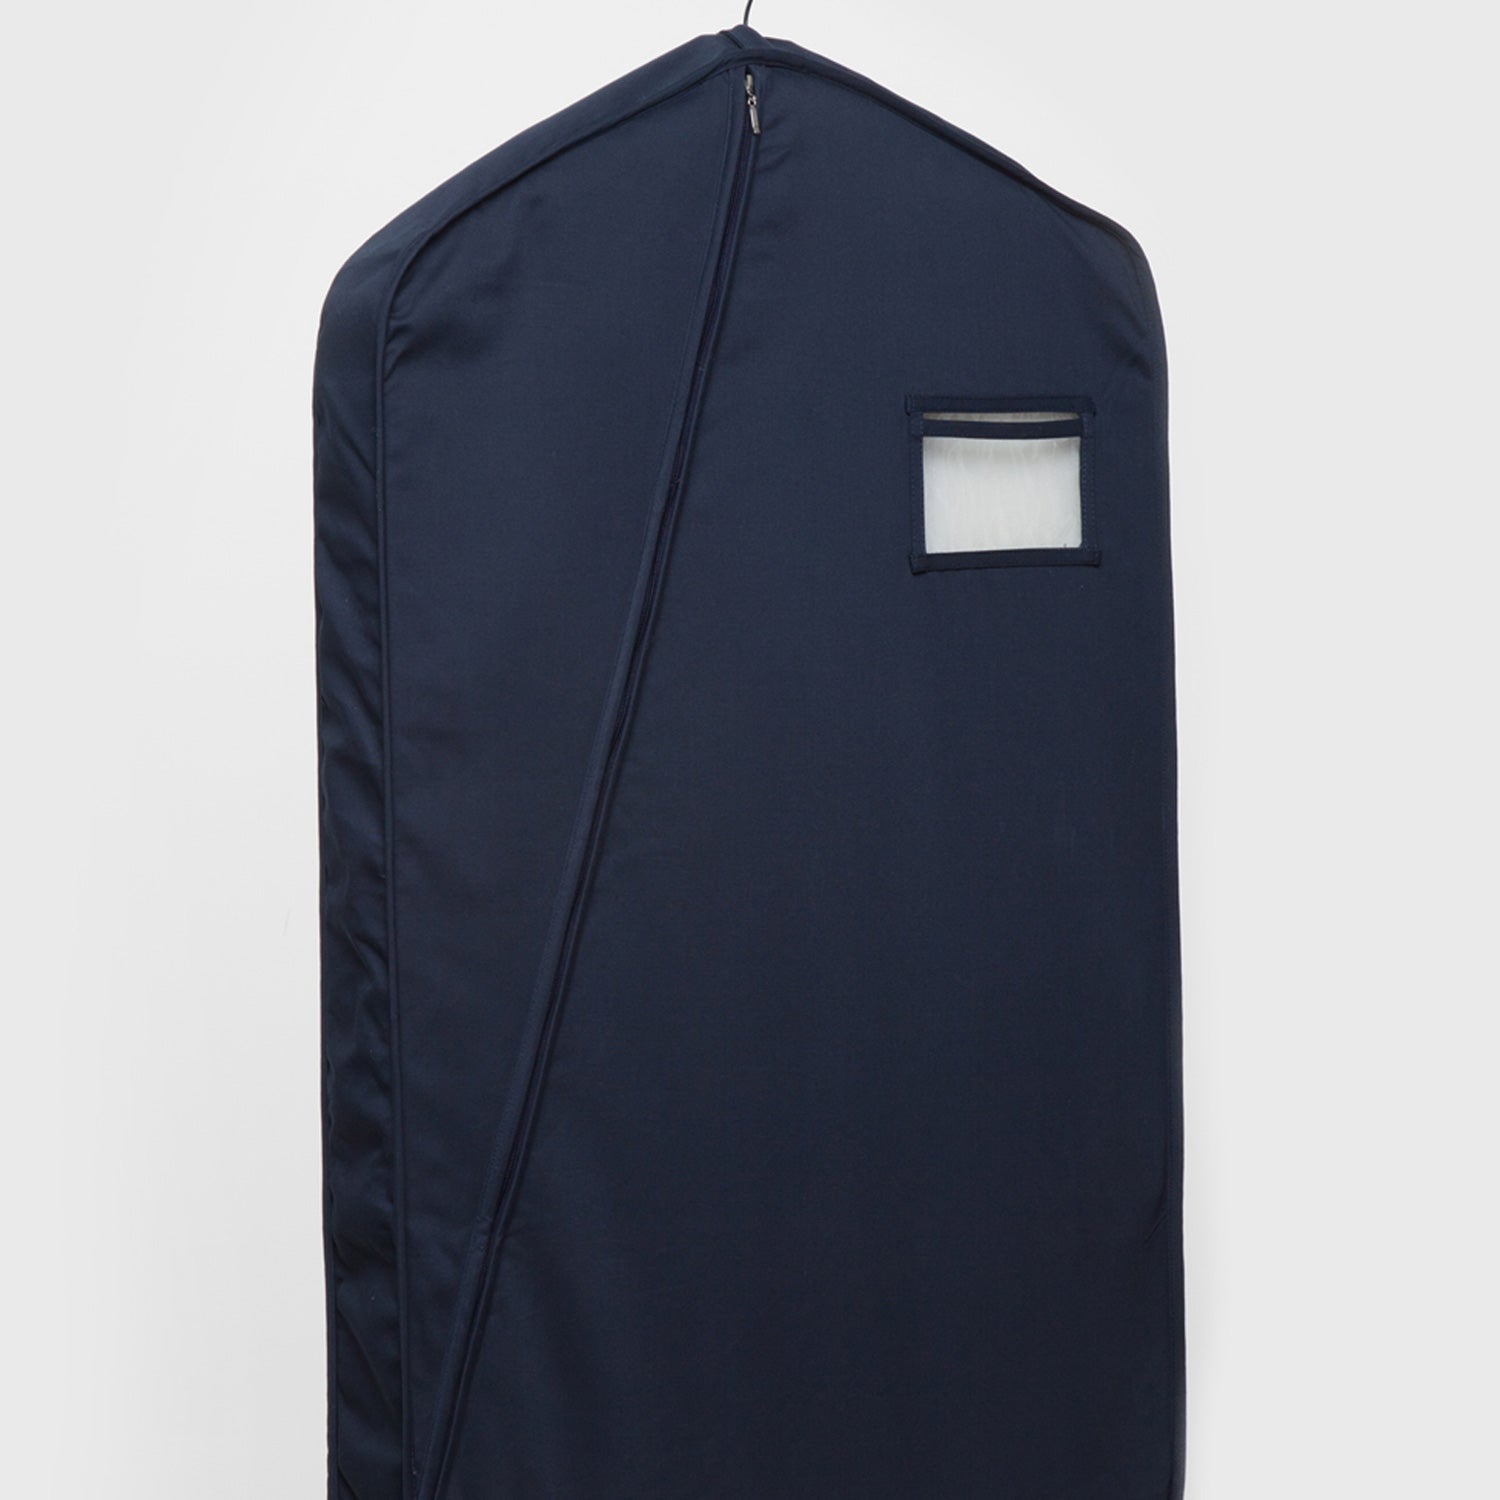 Modoker Suit Carry on Luggage Garment with Shoulder Strap for Men Women  Business Travel - Modoker